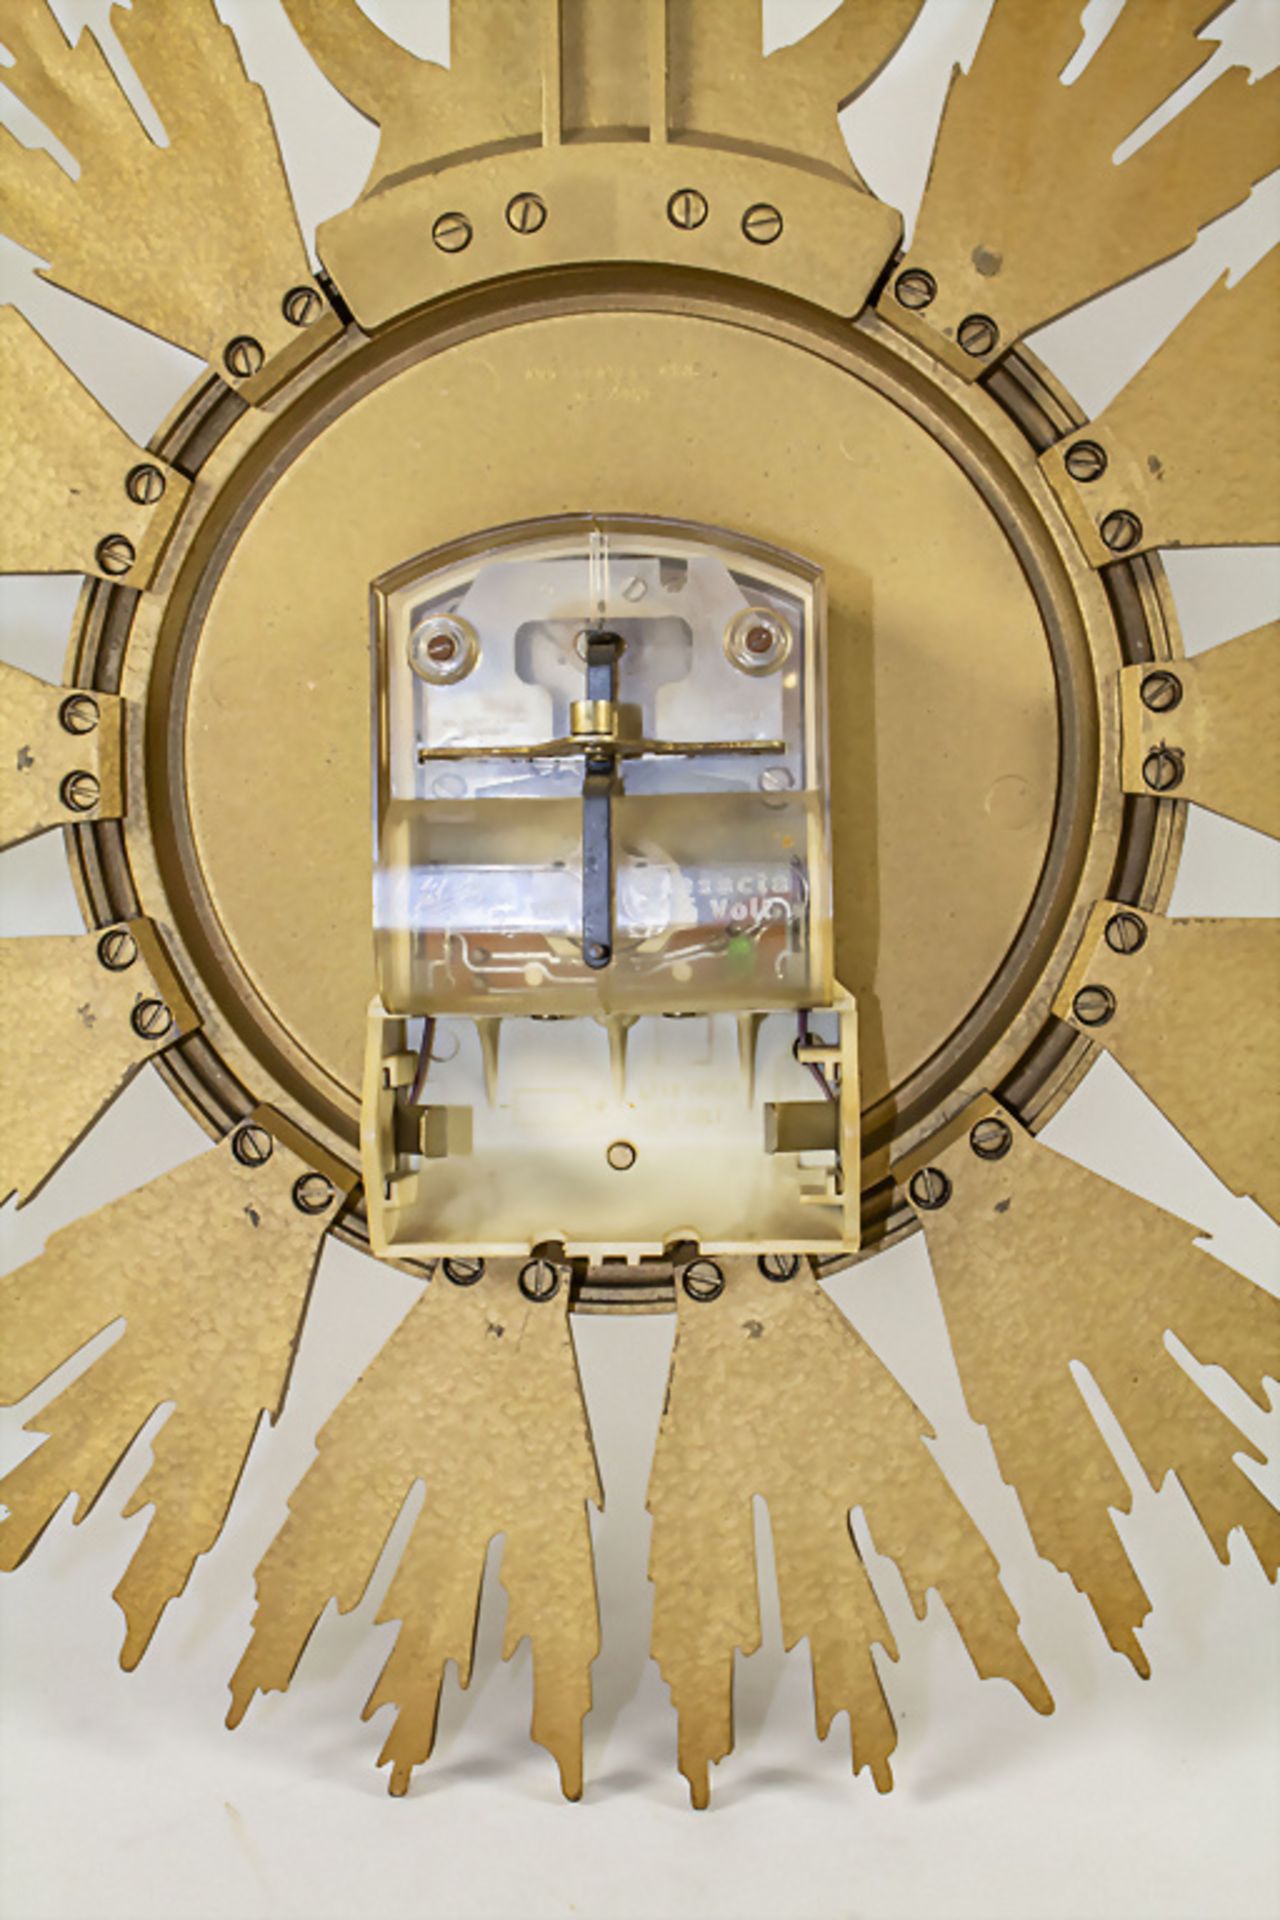 Dekorative Wanduhr 'Pendel mit Sonne' / A decorative pendulum and sun shaped wall clock, ... - Bild 4 aus 4